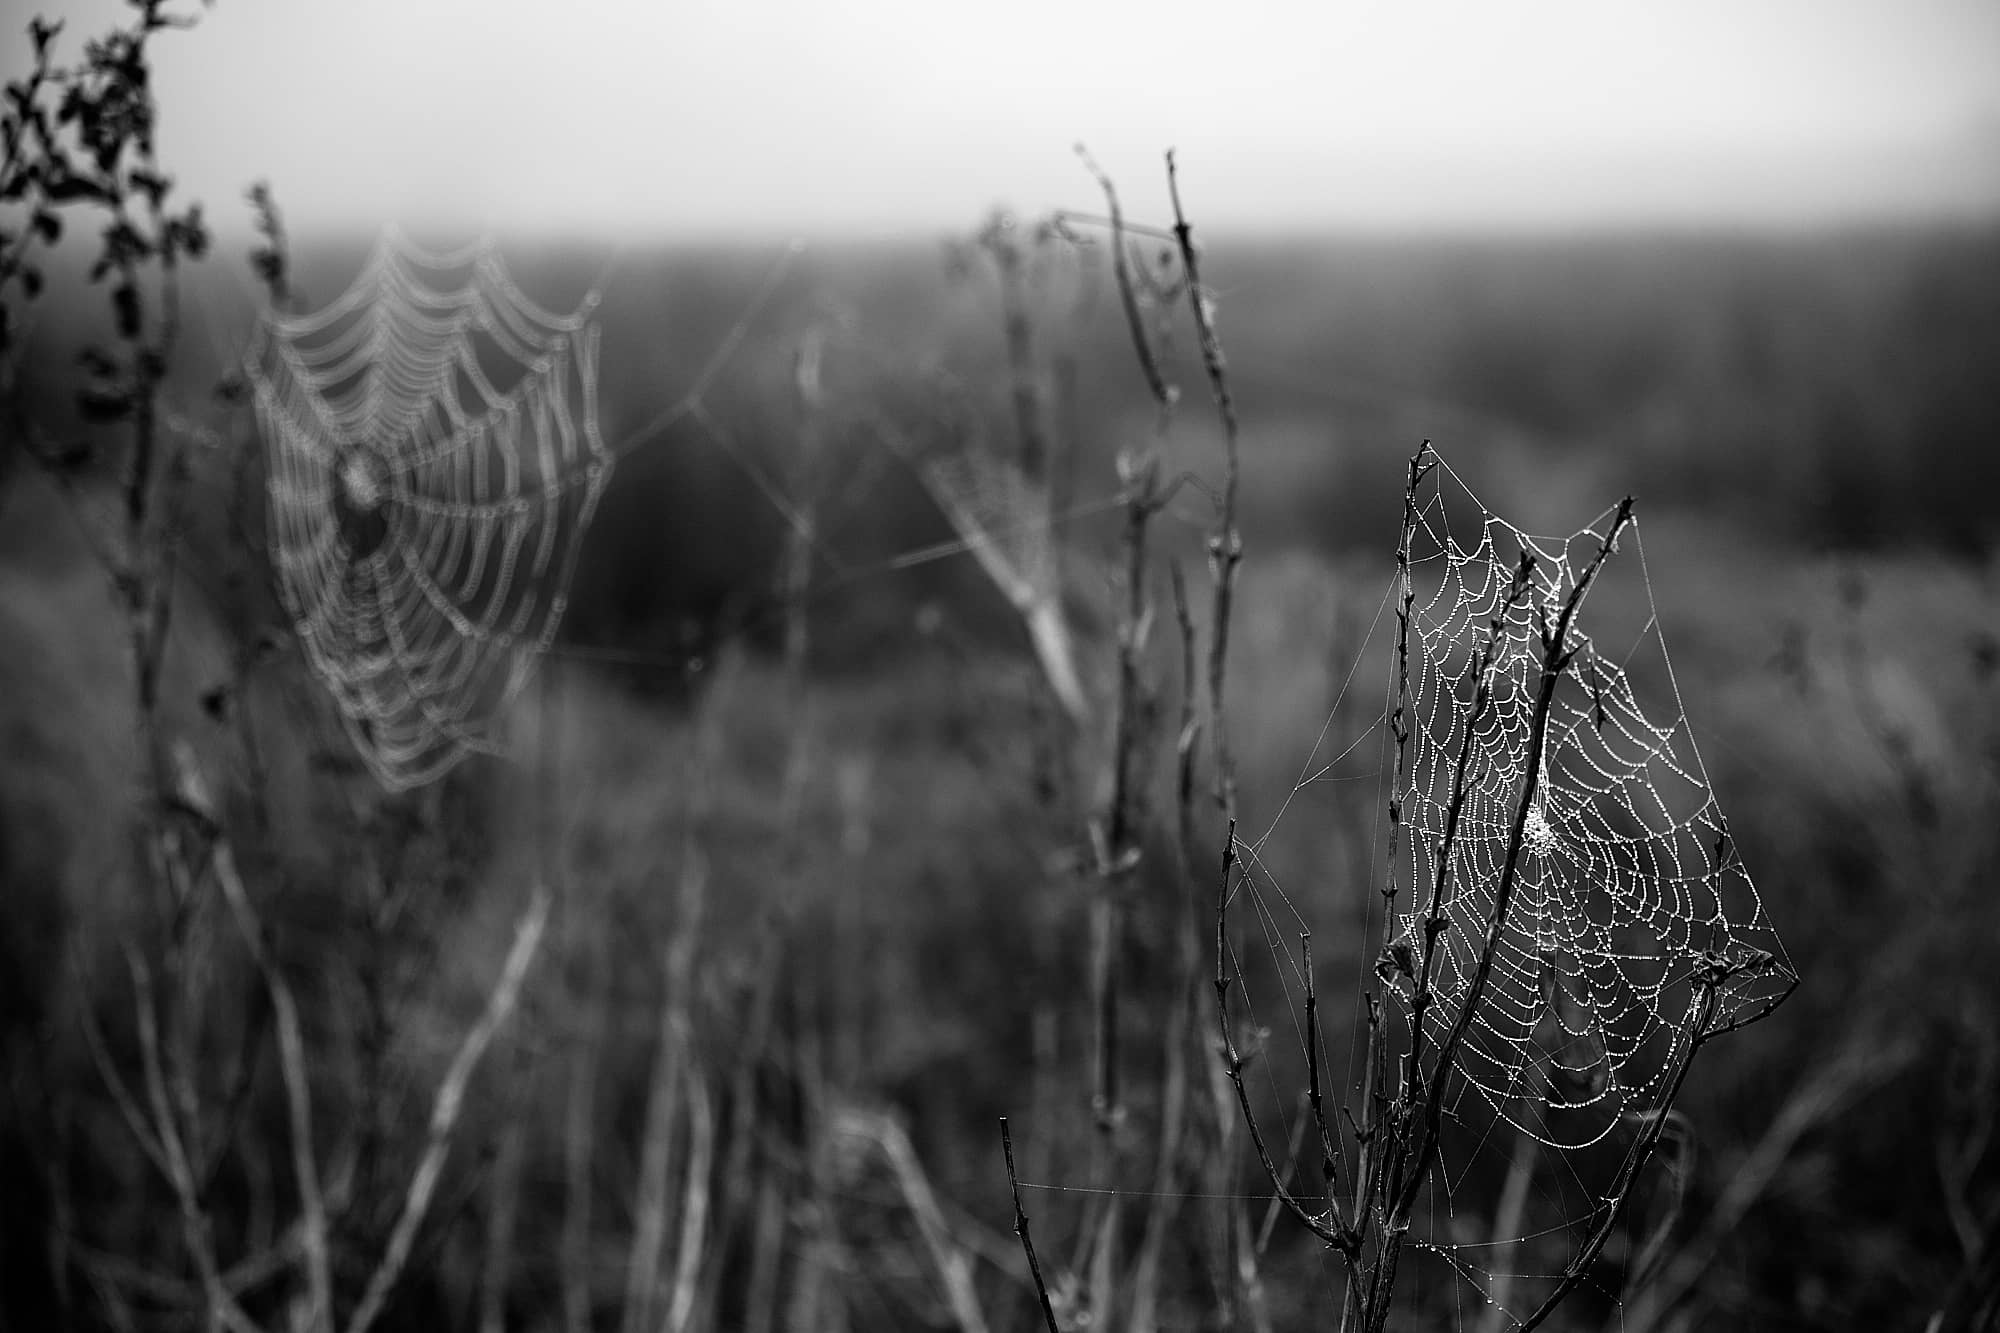 dewy-covered spider webs